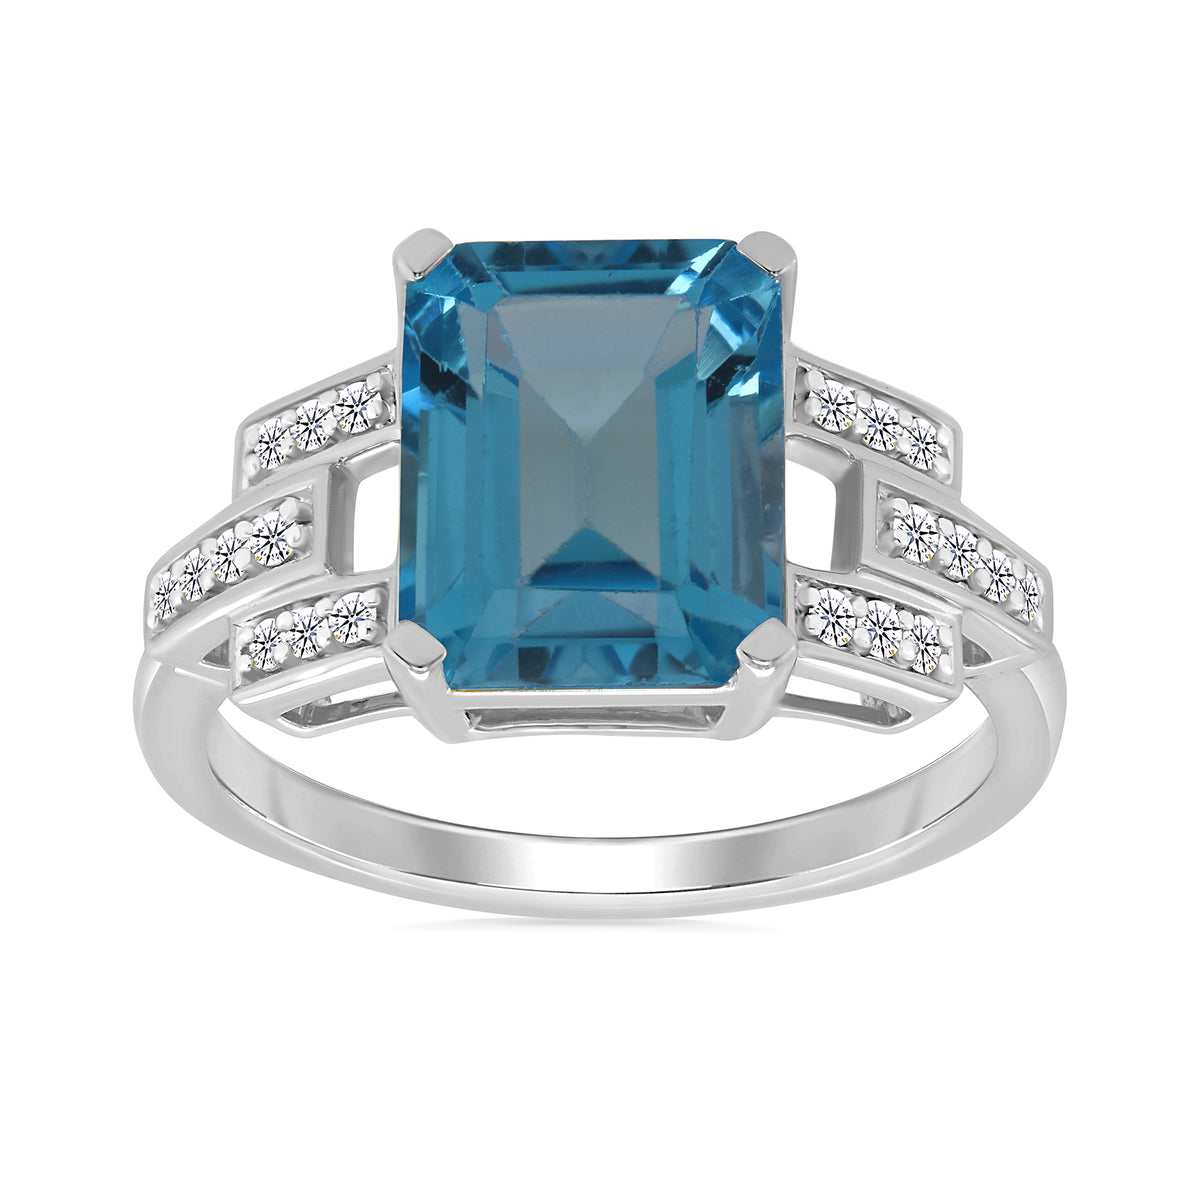 9ct white gold 10x8mm octagon blue topaz &amp; diamond ring 0.11ct